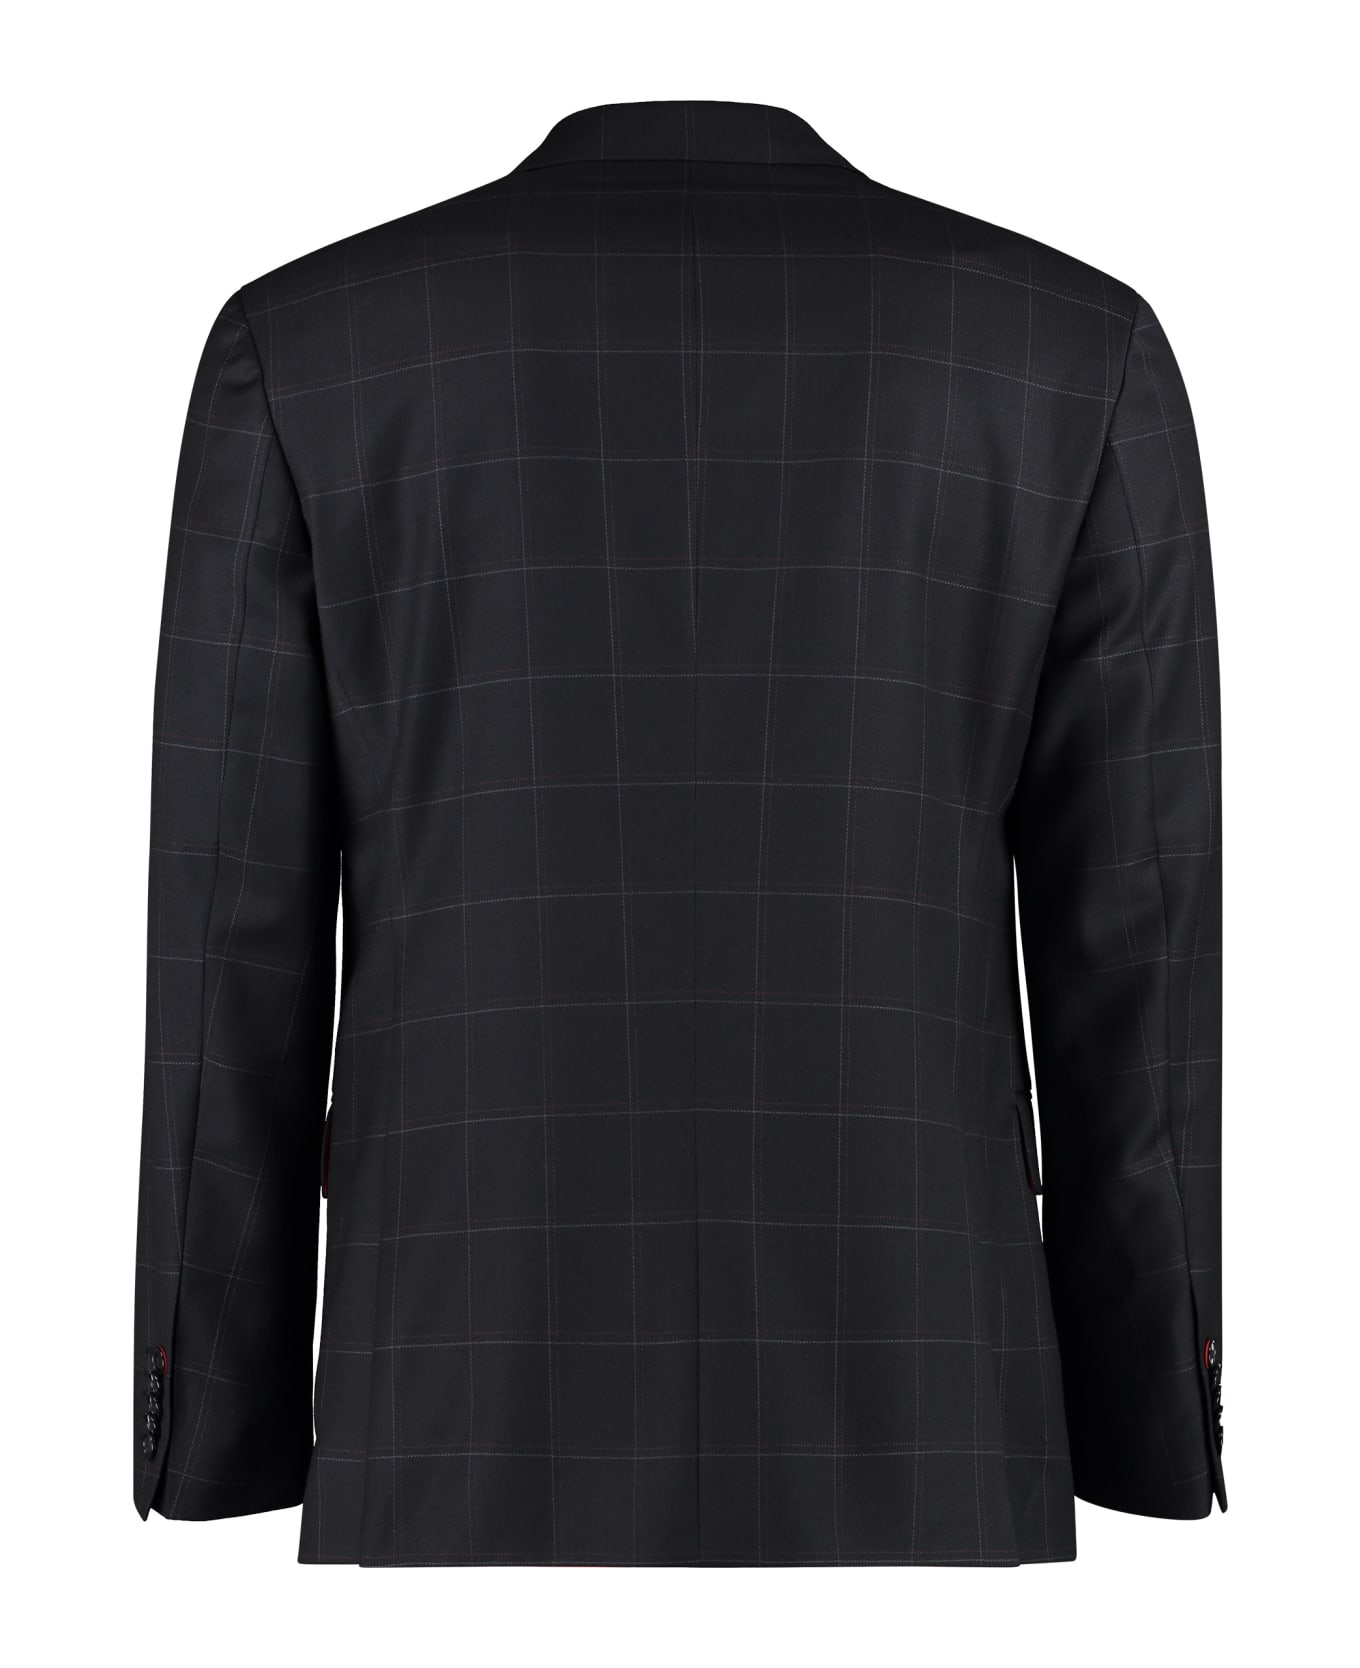 Hugo Boss Double-breasted Wool Jacket - black ブレザー